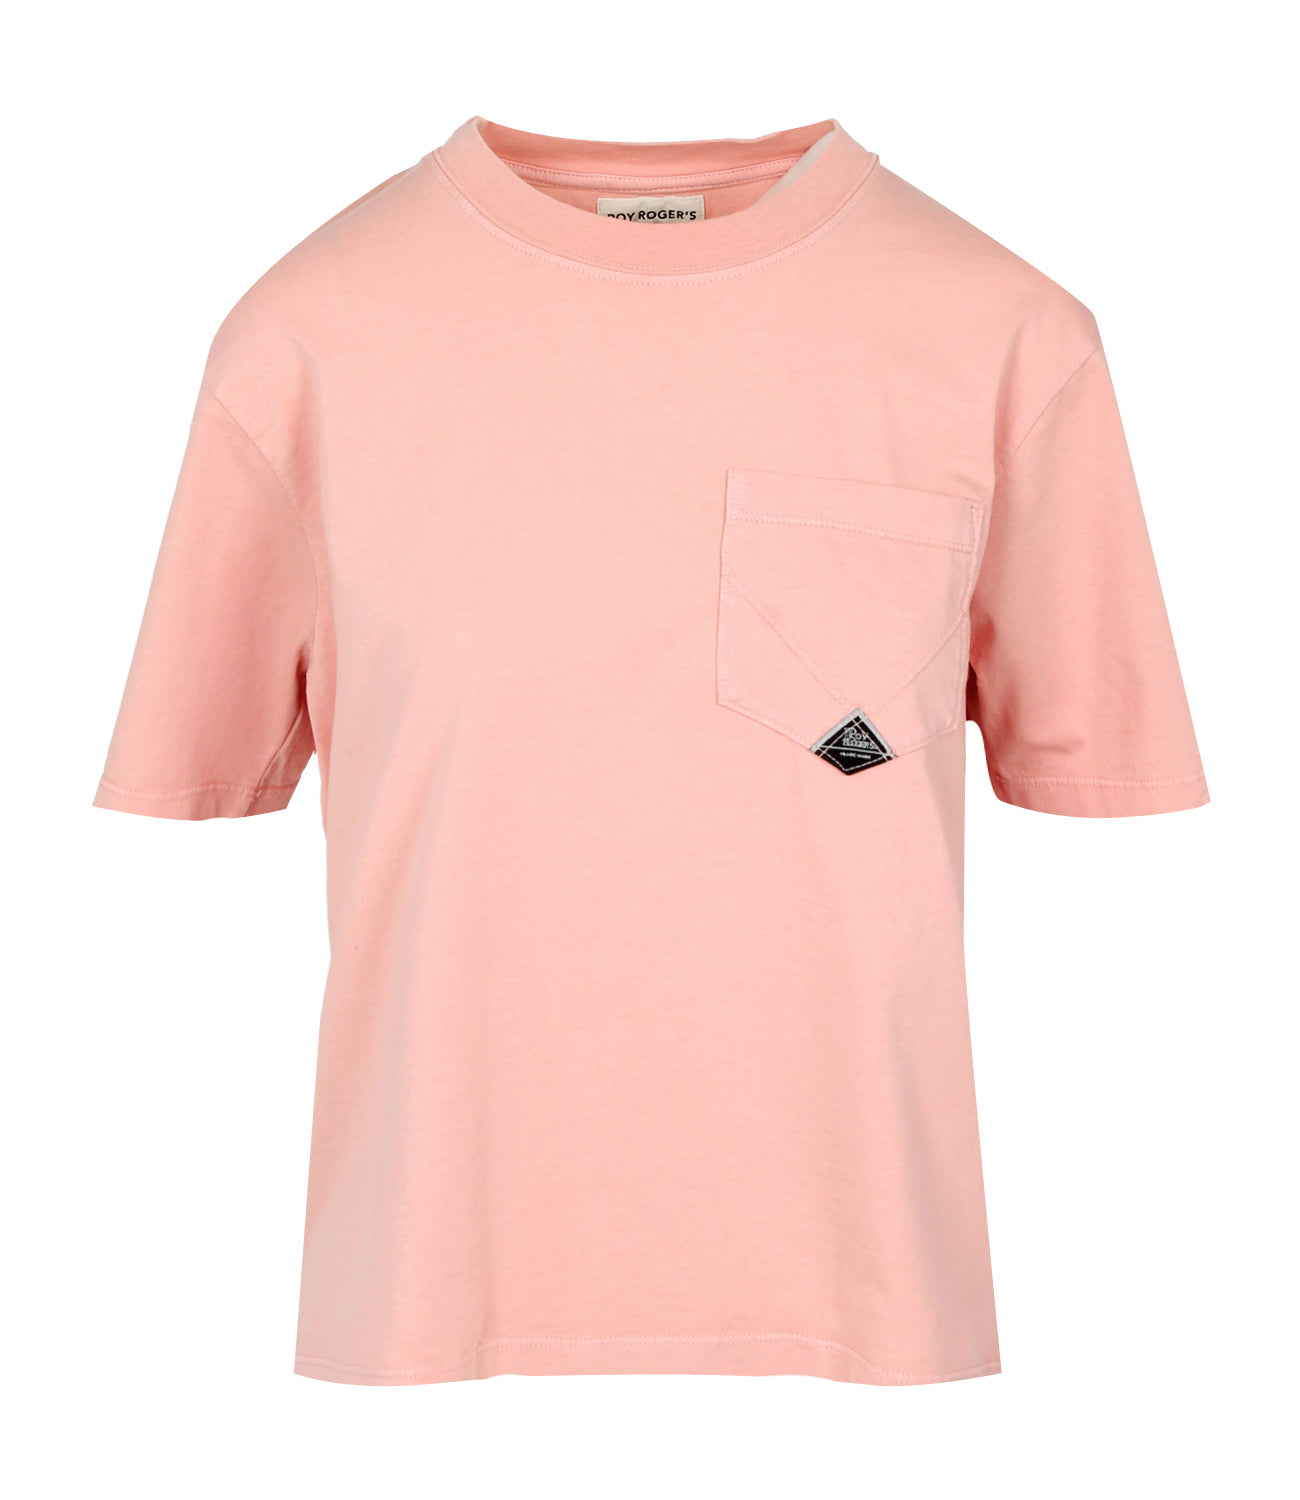 Roy Roger's | T-Shirt Pocket Rosa antico